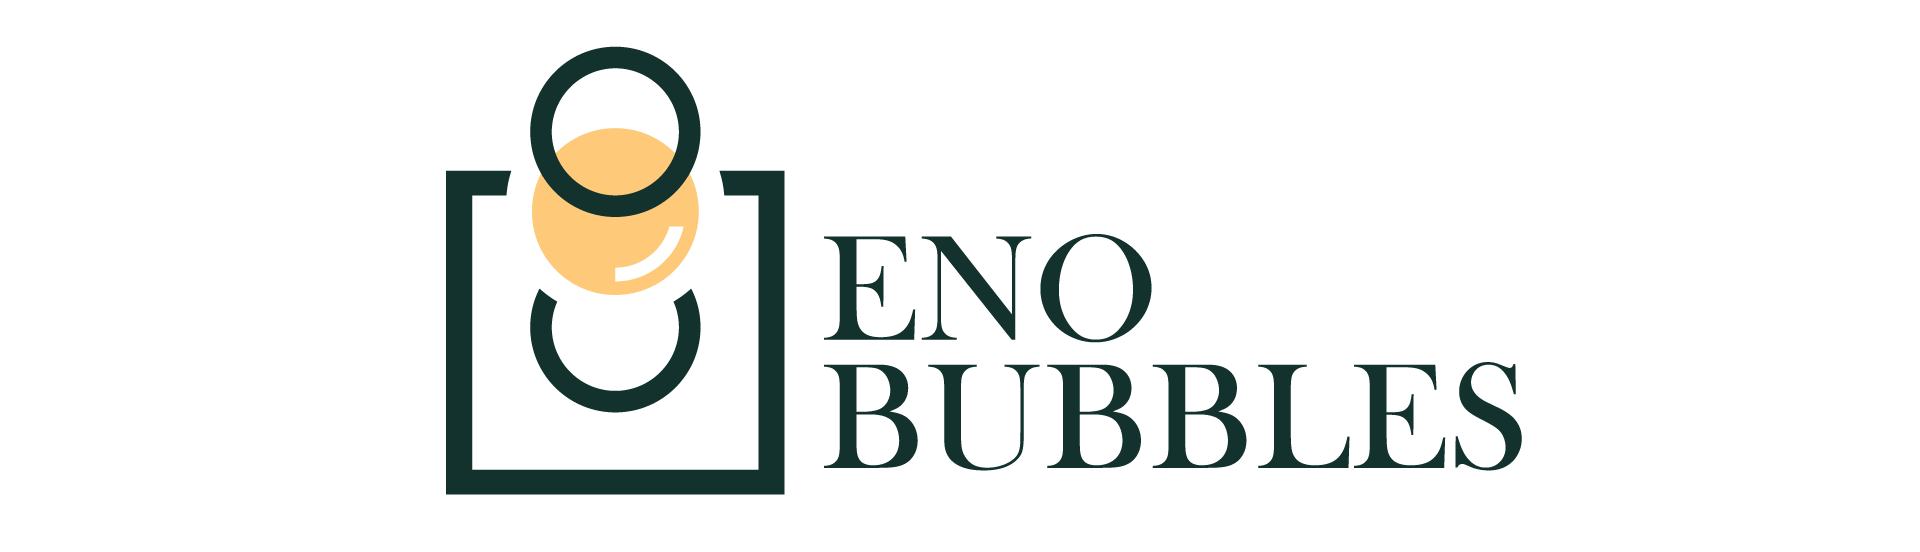 EnoBubbles